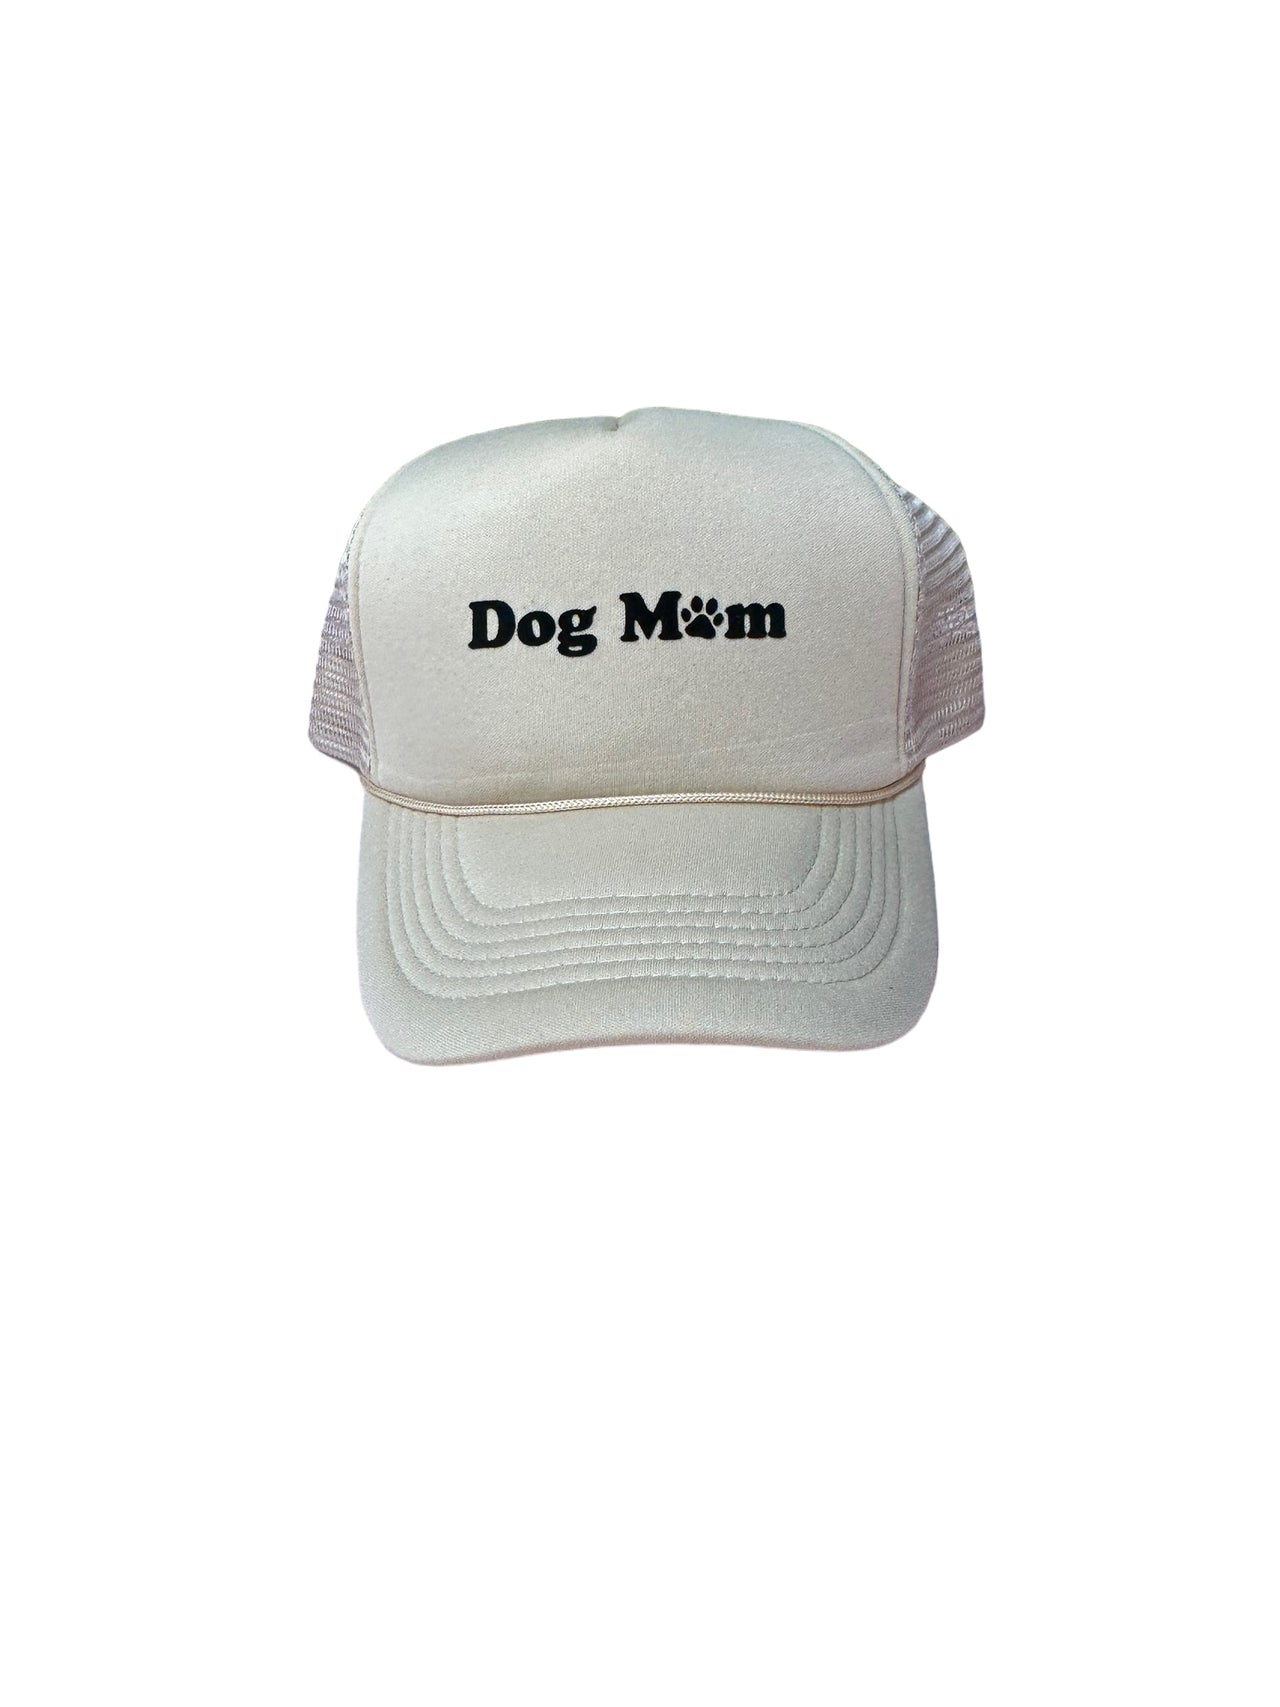 Dog Mom Trucker - Tan